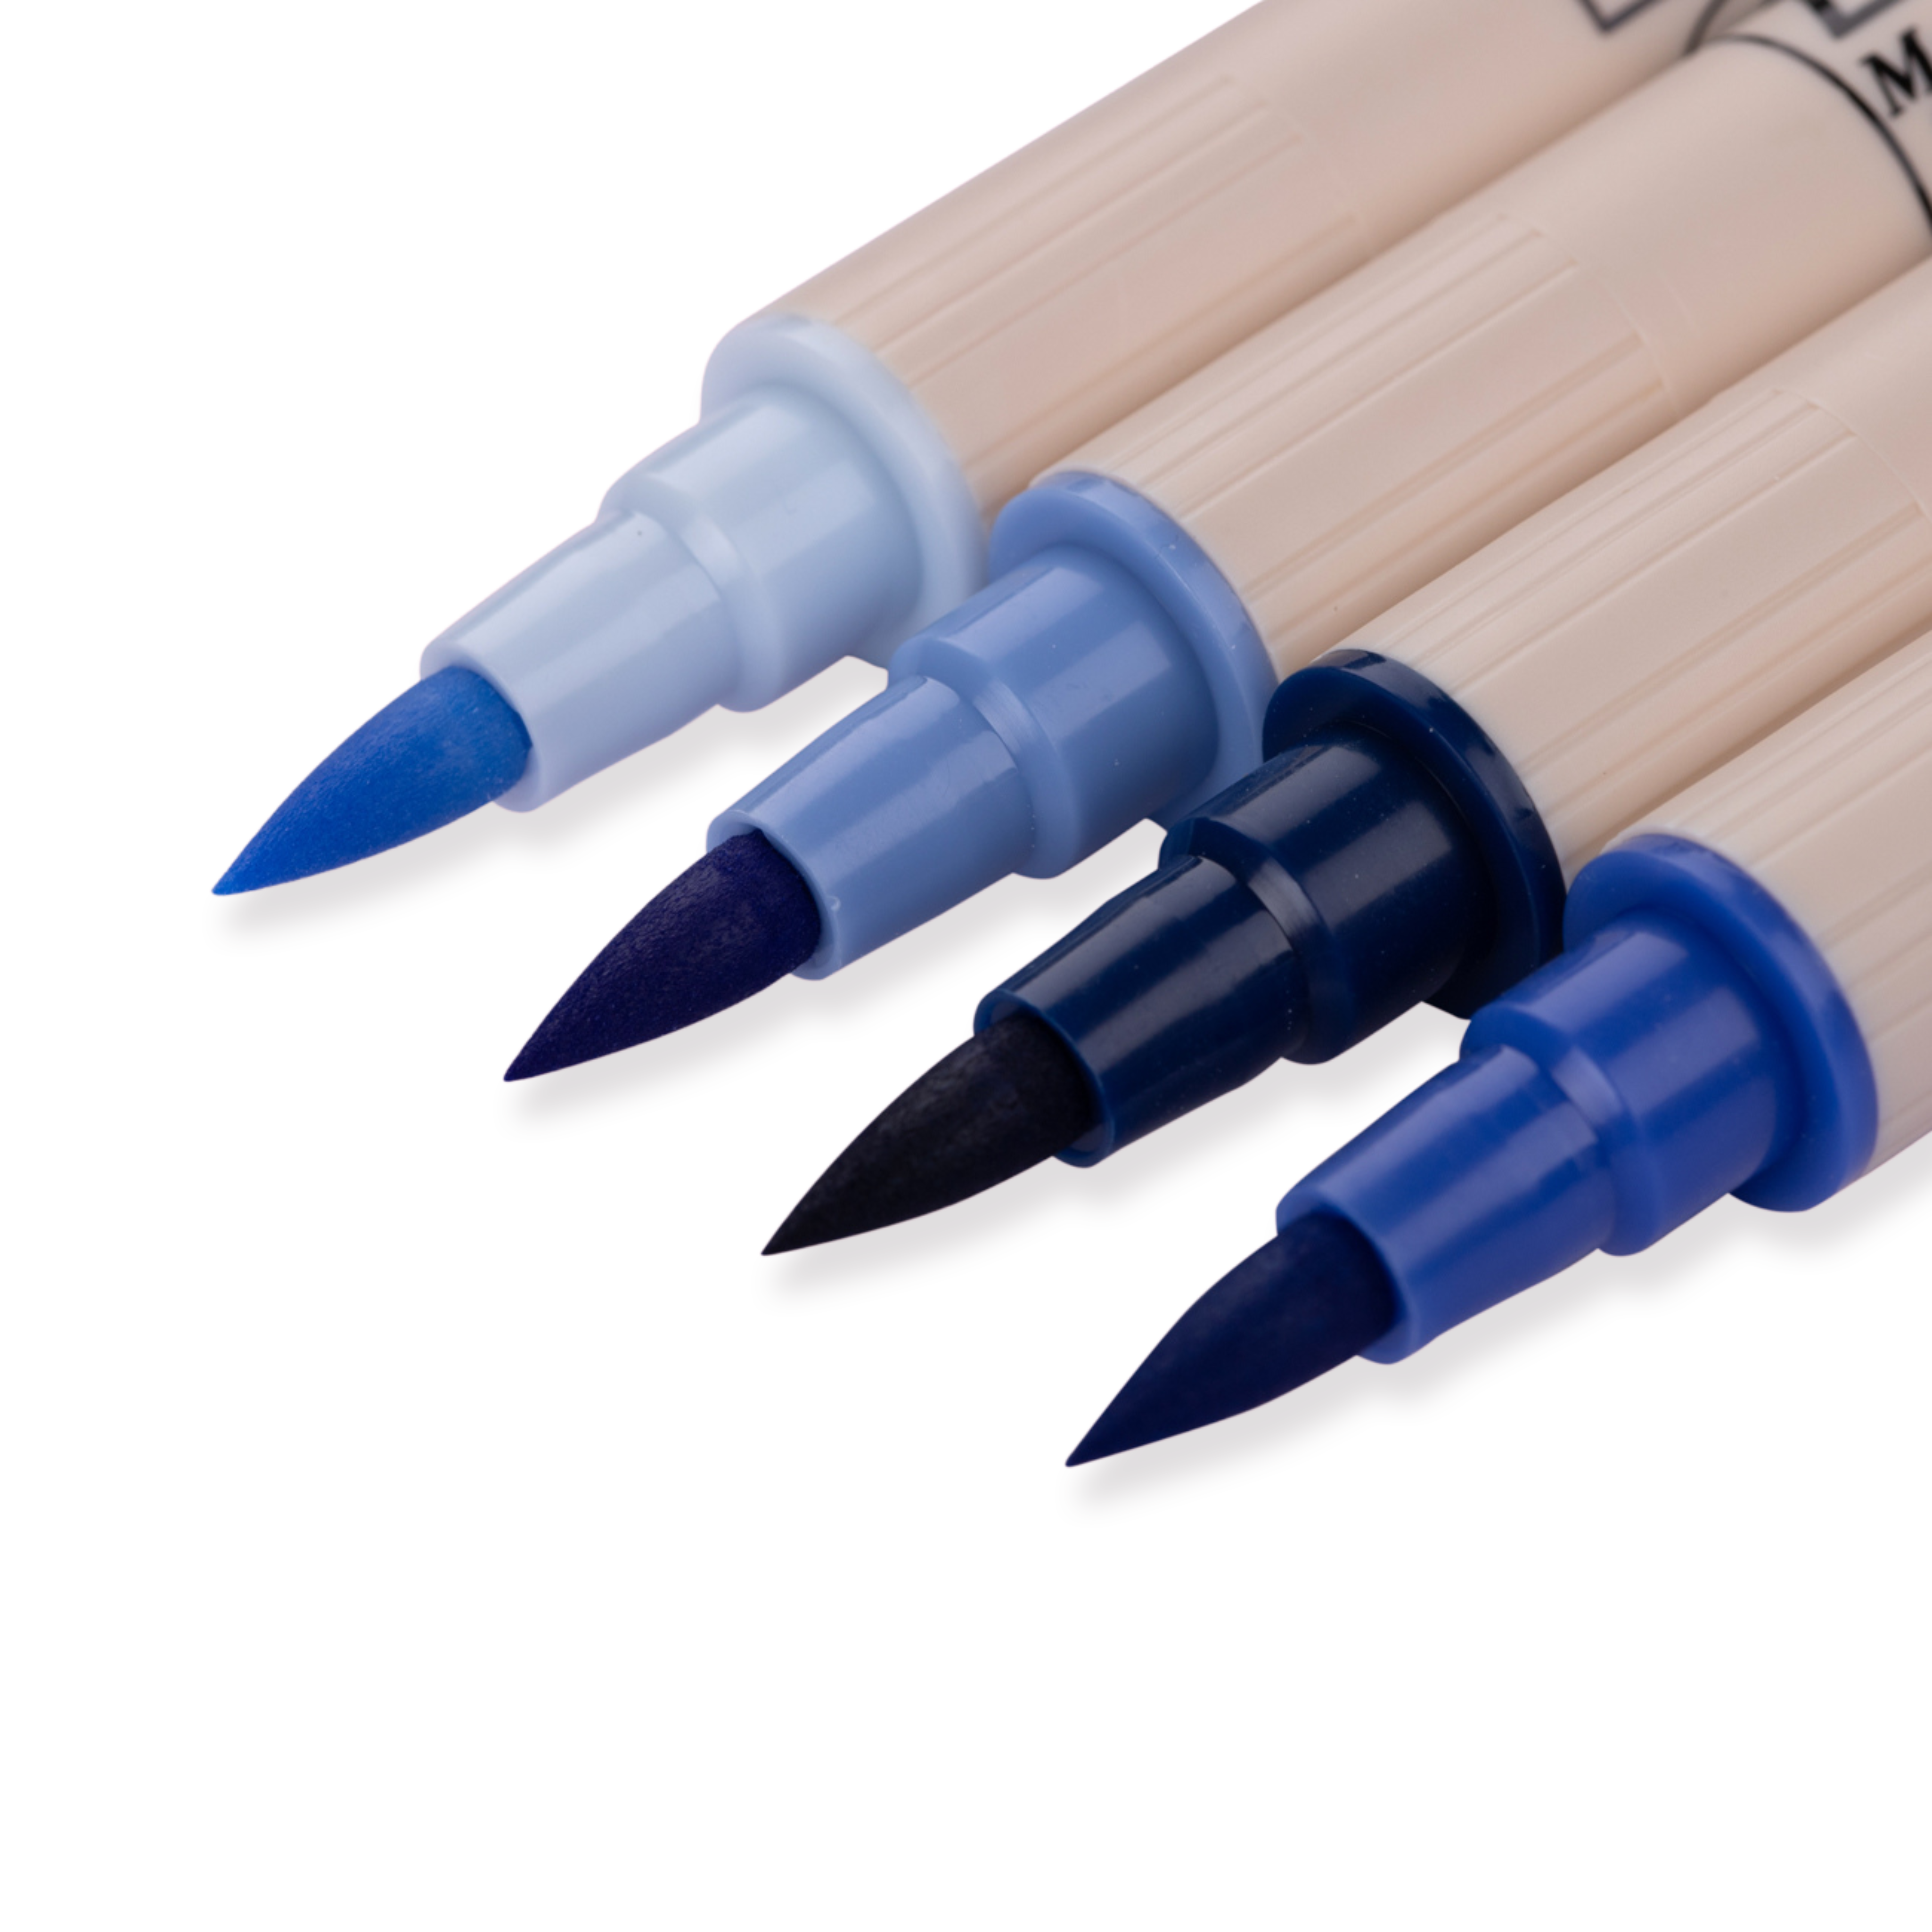 Kuretake Zig Brushables Brush Pen - 4 Colors Blue Set